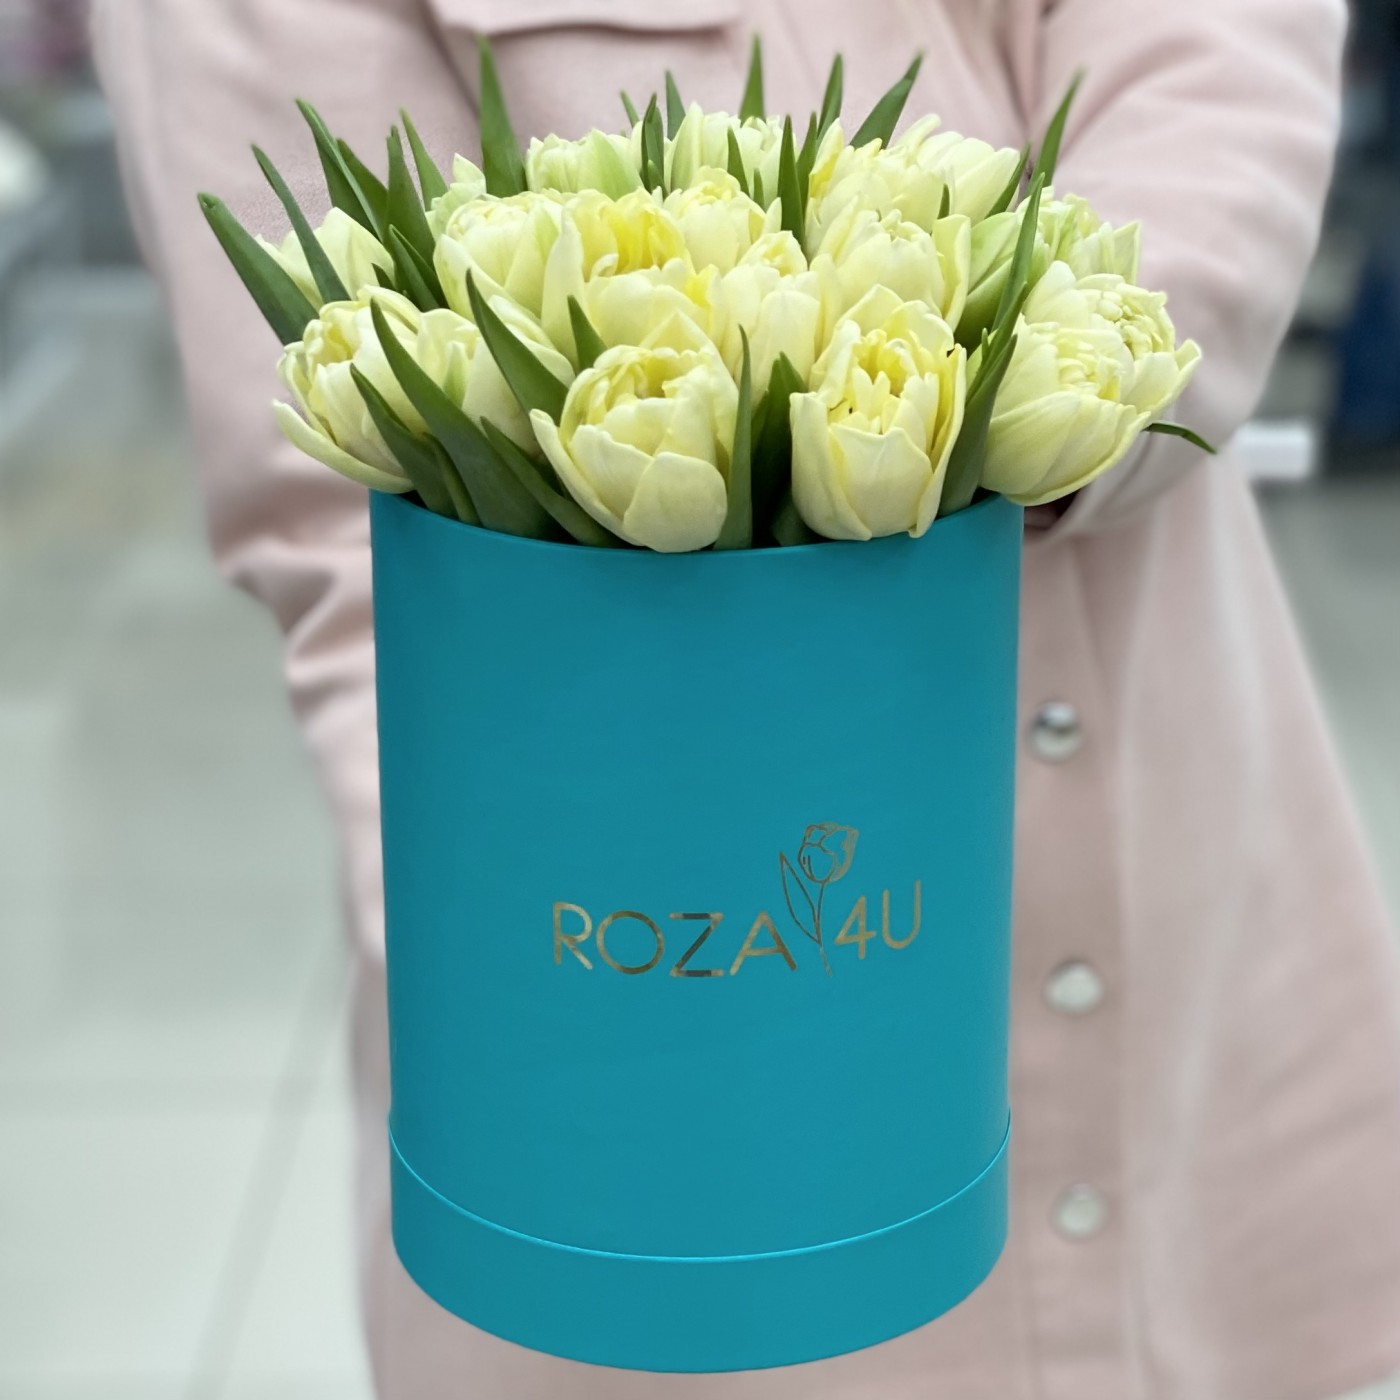 25 пионовидных тюльпанов Авант Гард в коробке